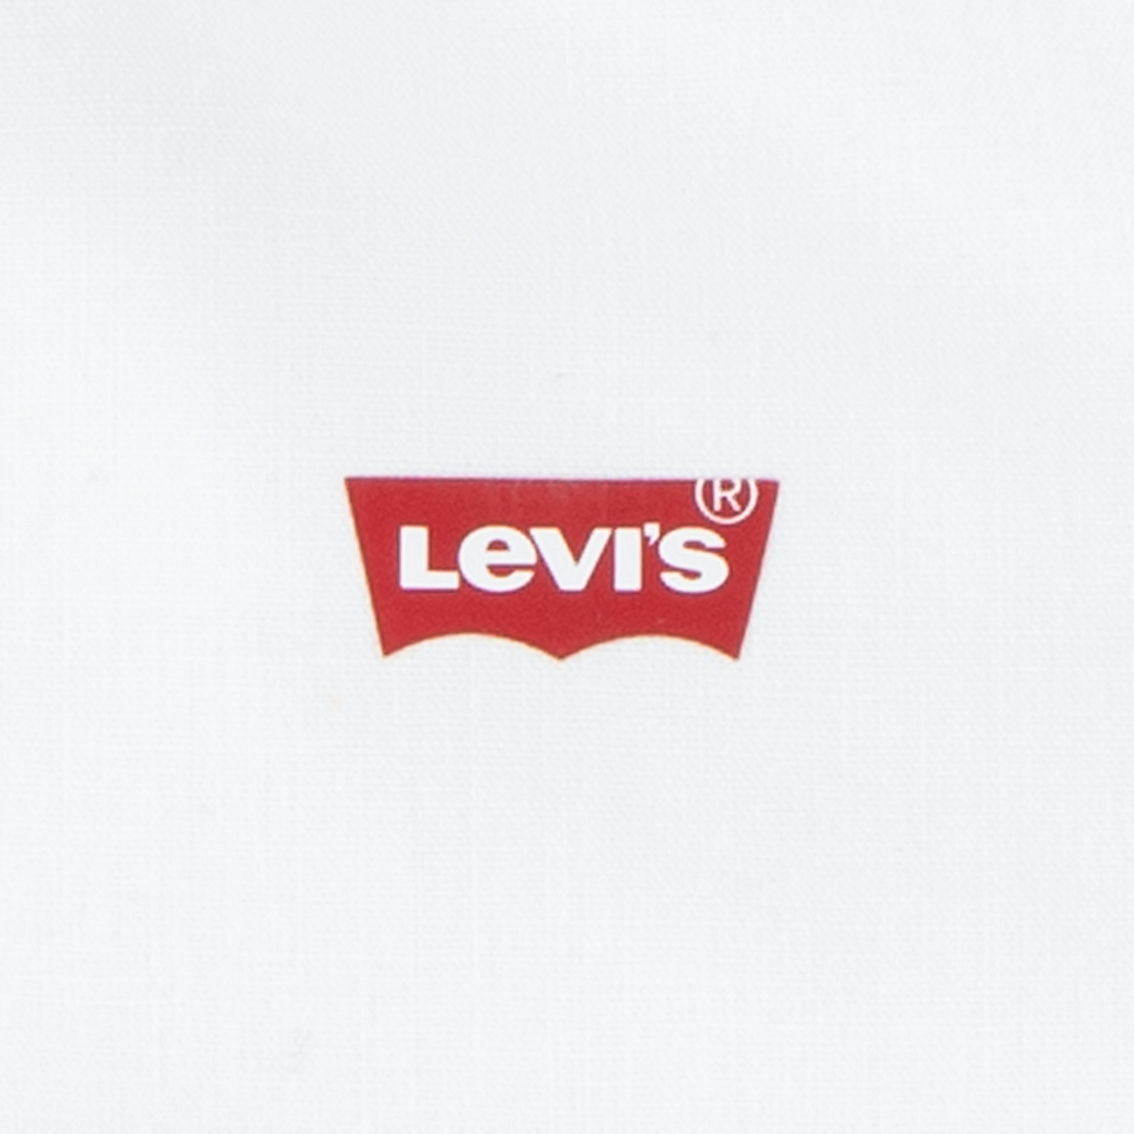 Levi's Little Boys Woven Shirt - Image 3 of 3